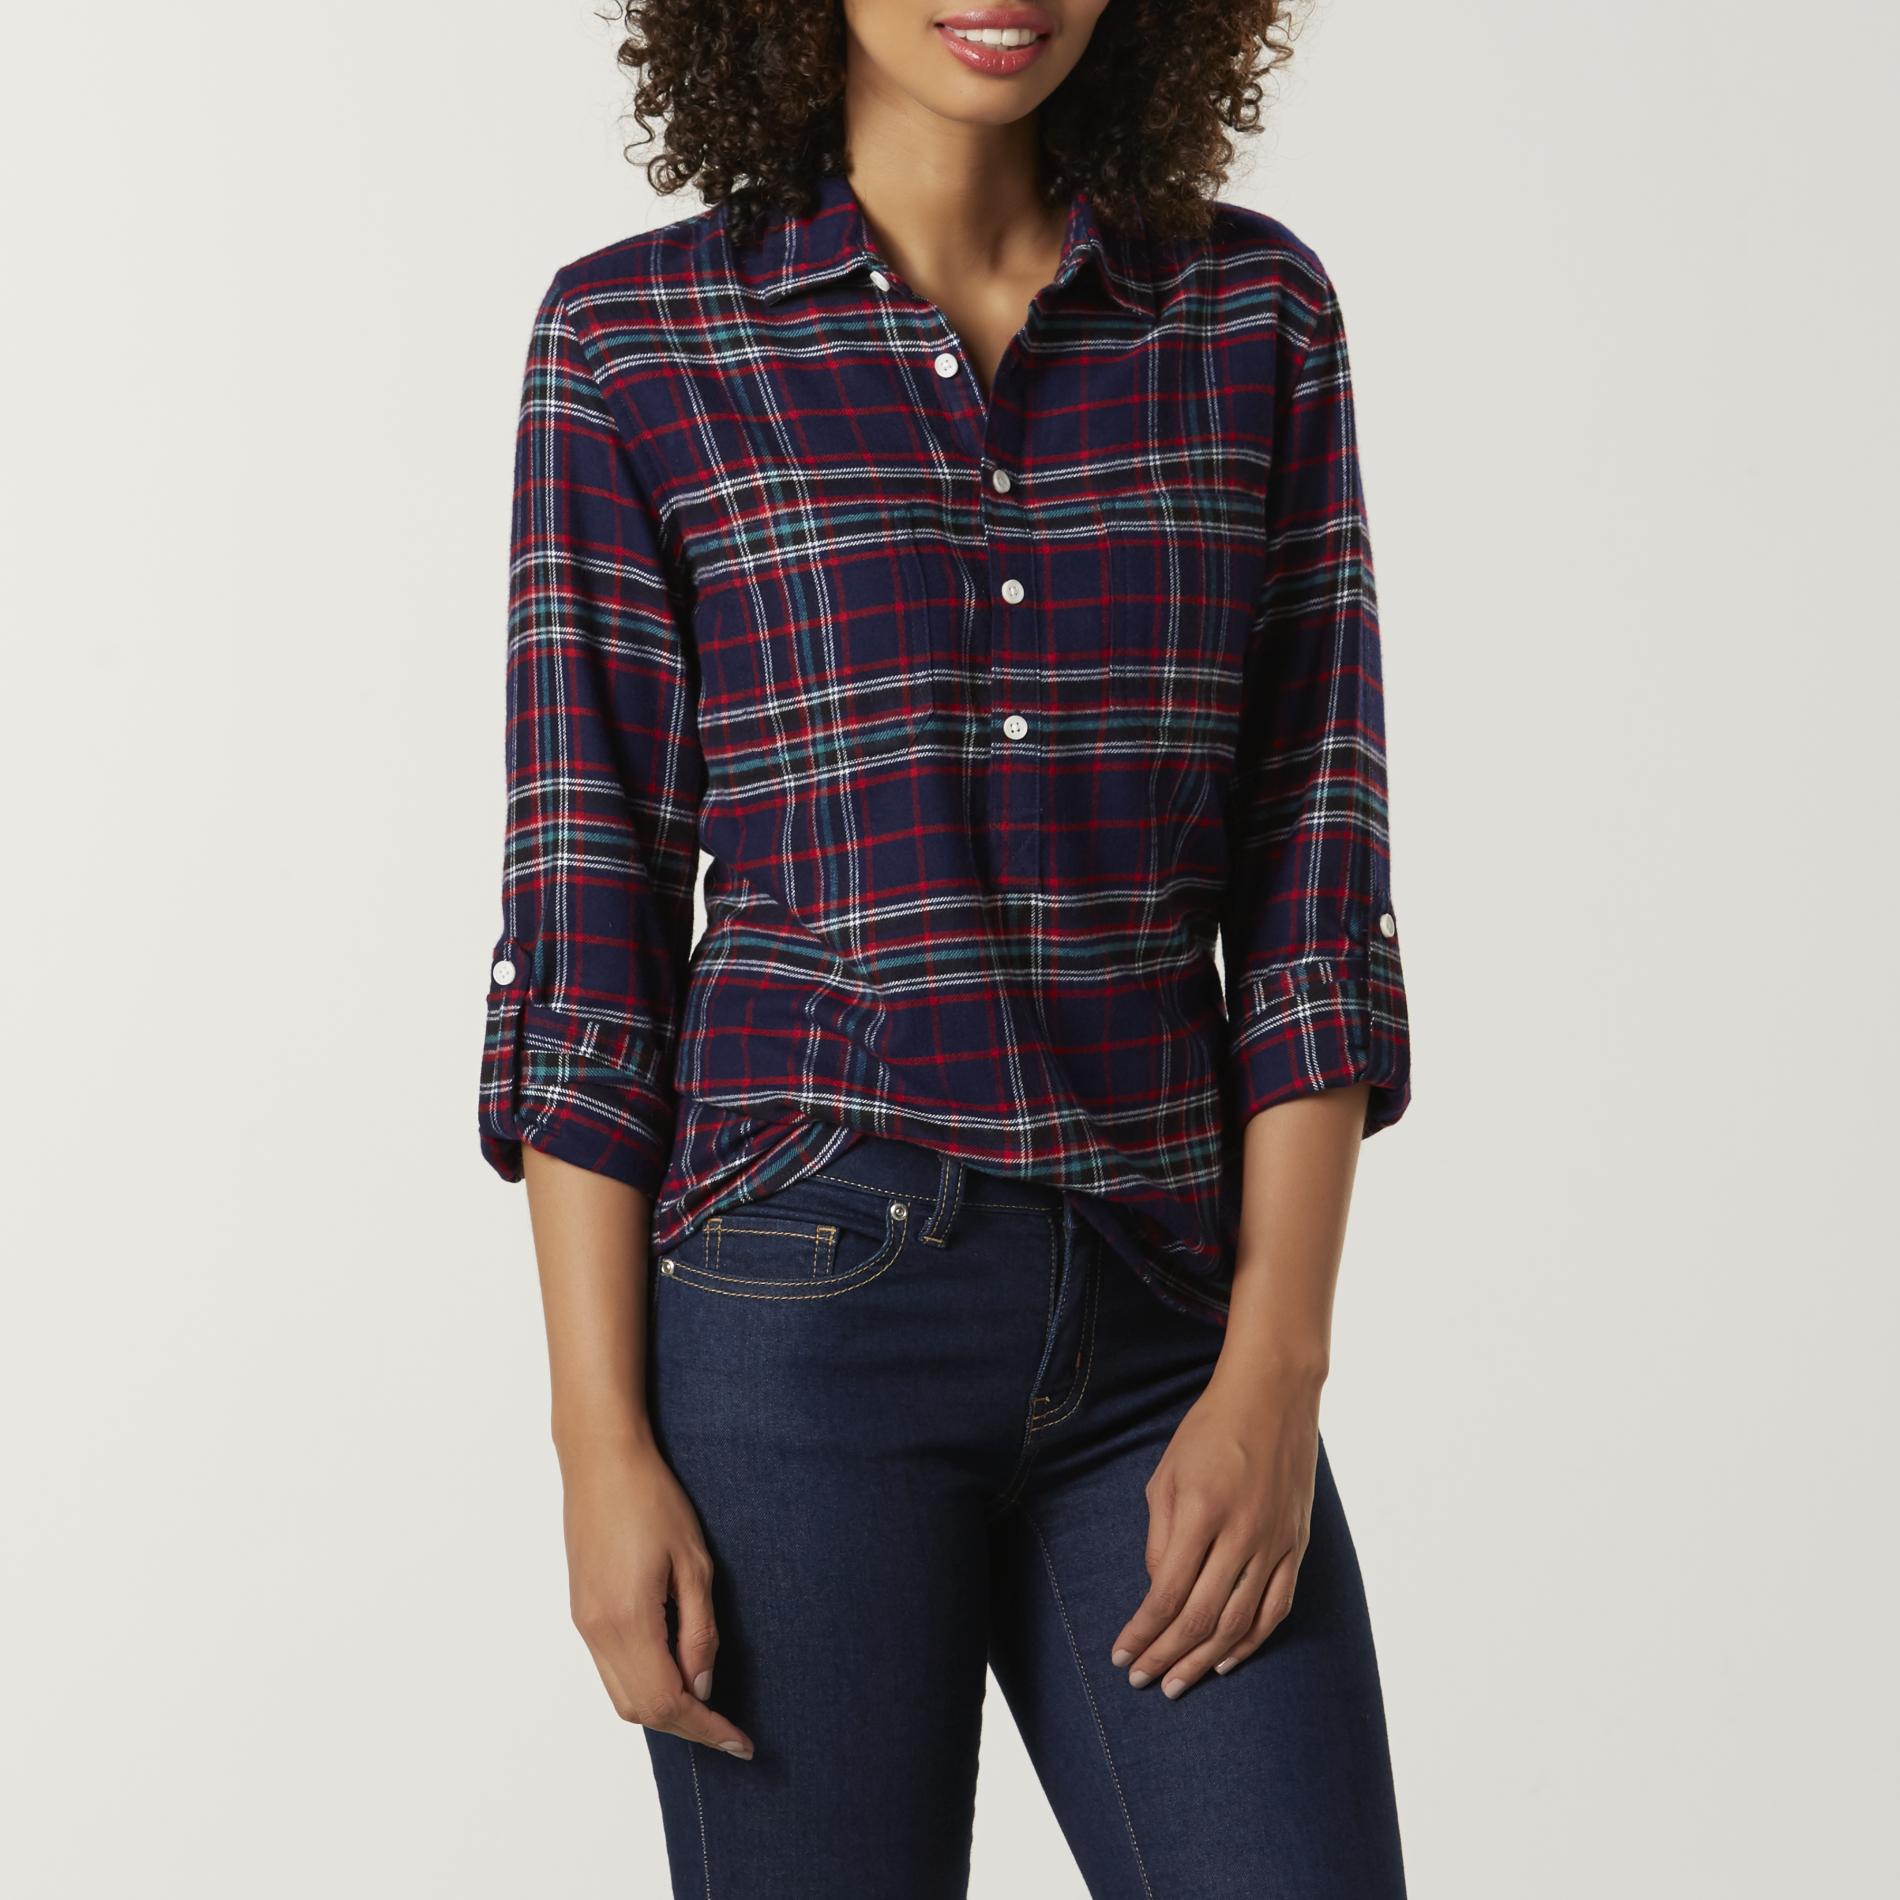 Roebuck & Co. Women's Flannel Shirt - Plaid